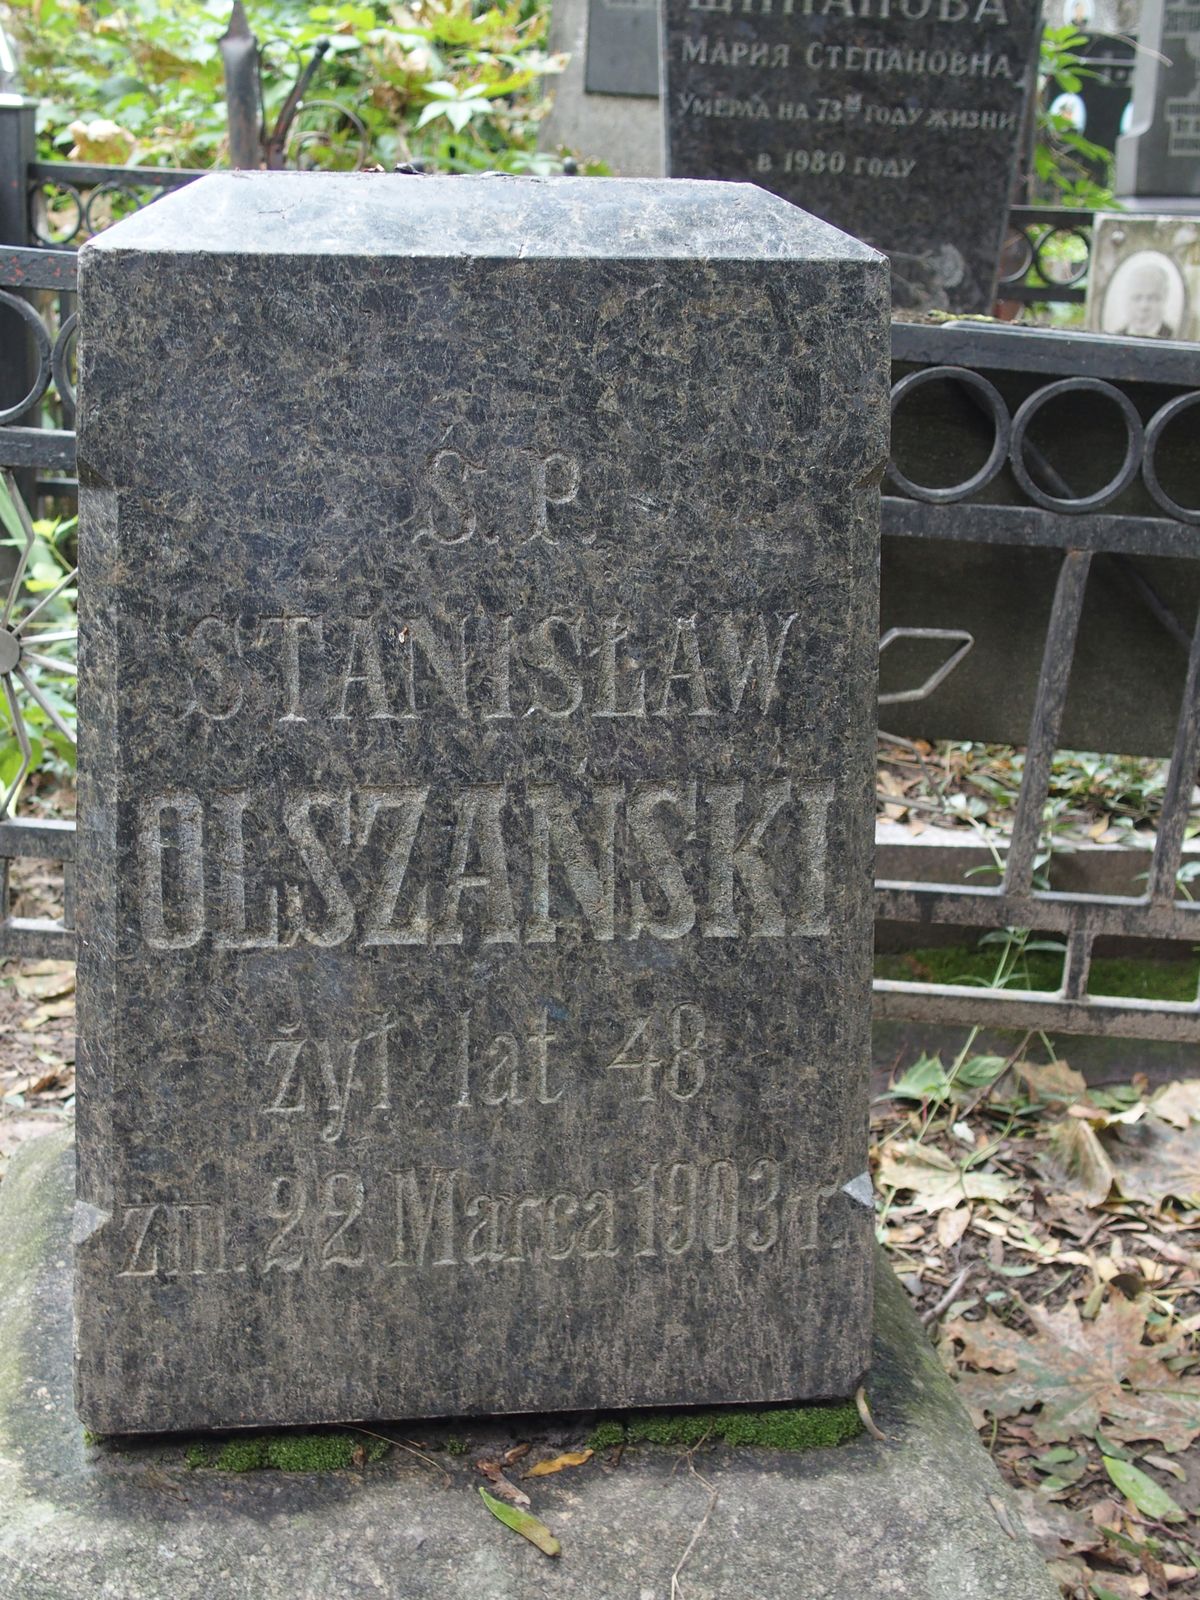 Inscription from the gravestone of Stanislav Olshansky, Bajkova cemetery in Kiev, as of 2021